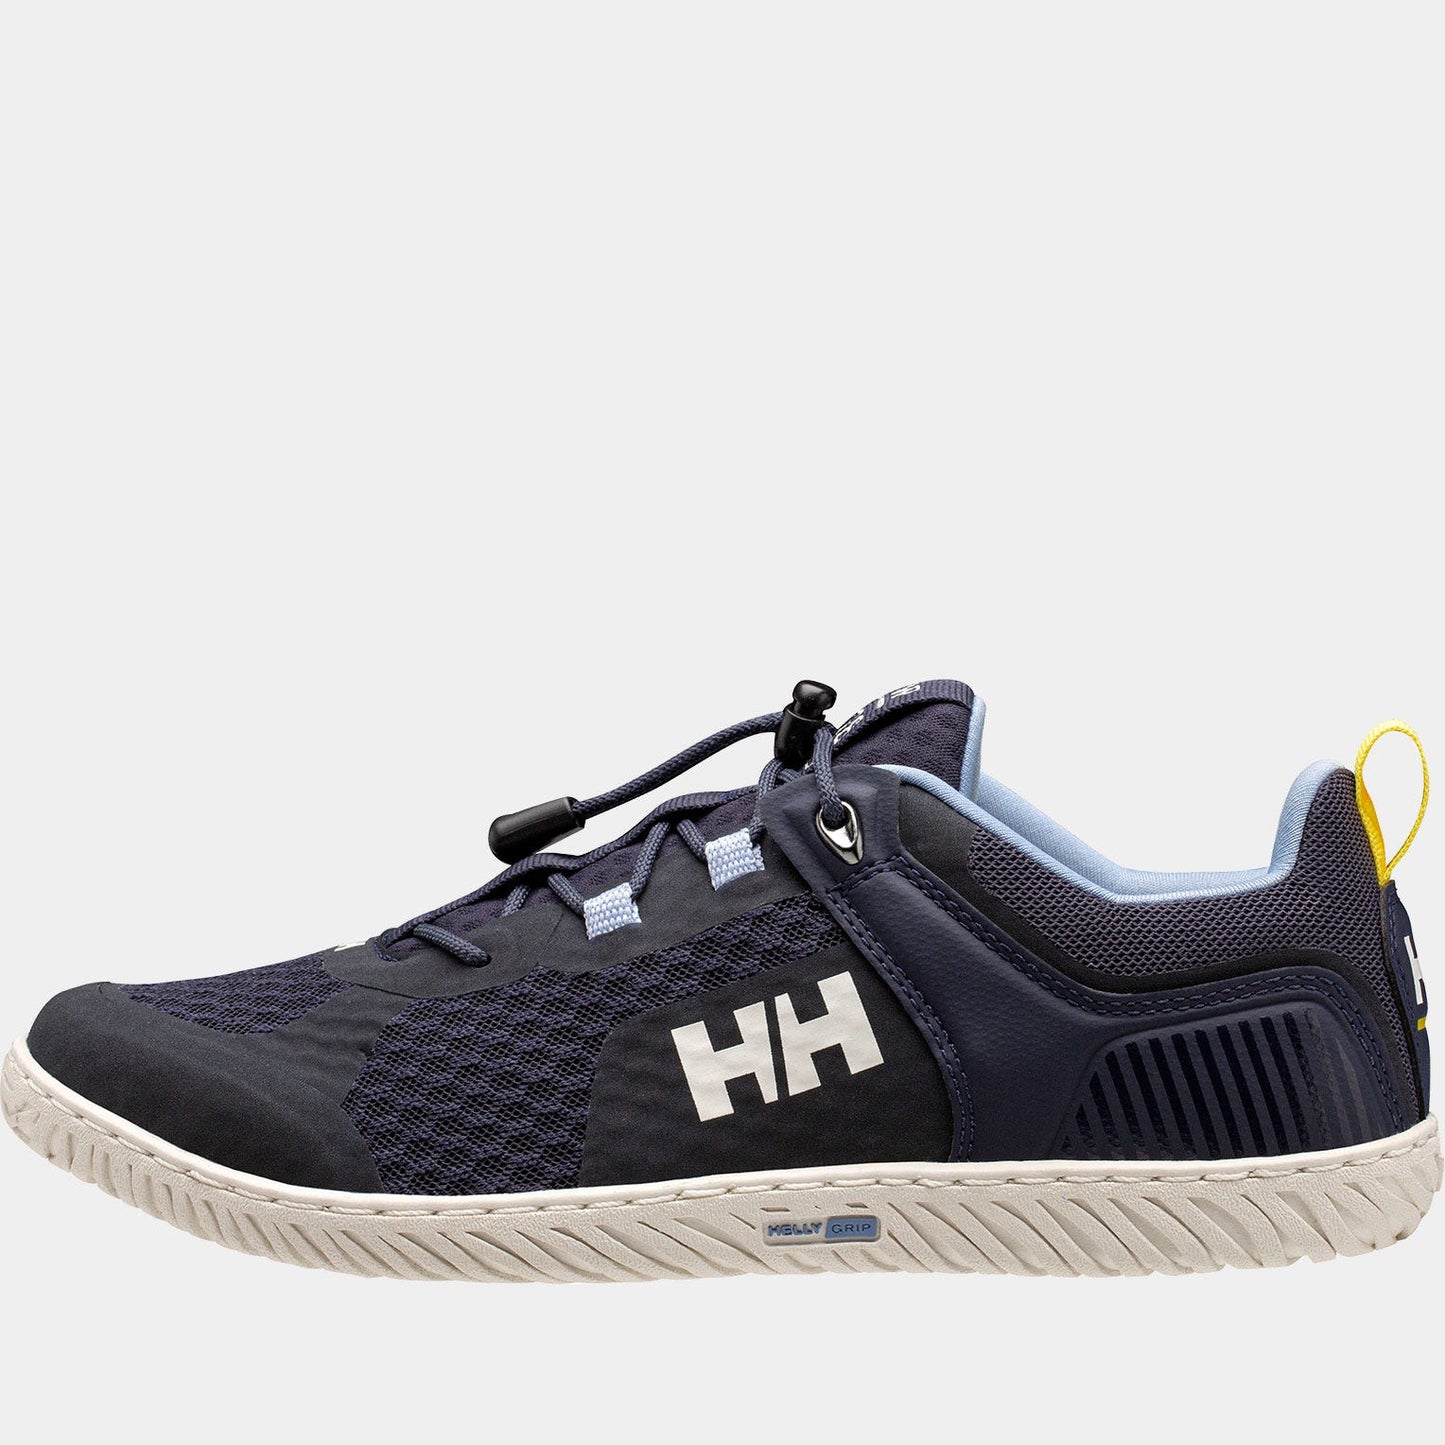 Helly Hansen Women's HP Foil V2 Sailing Shoes